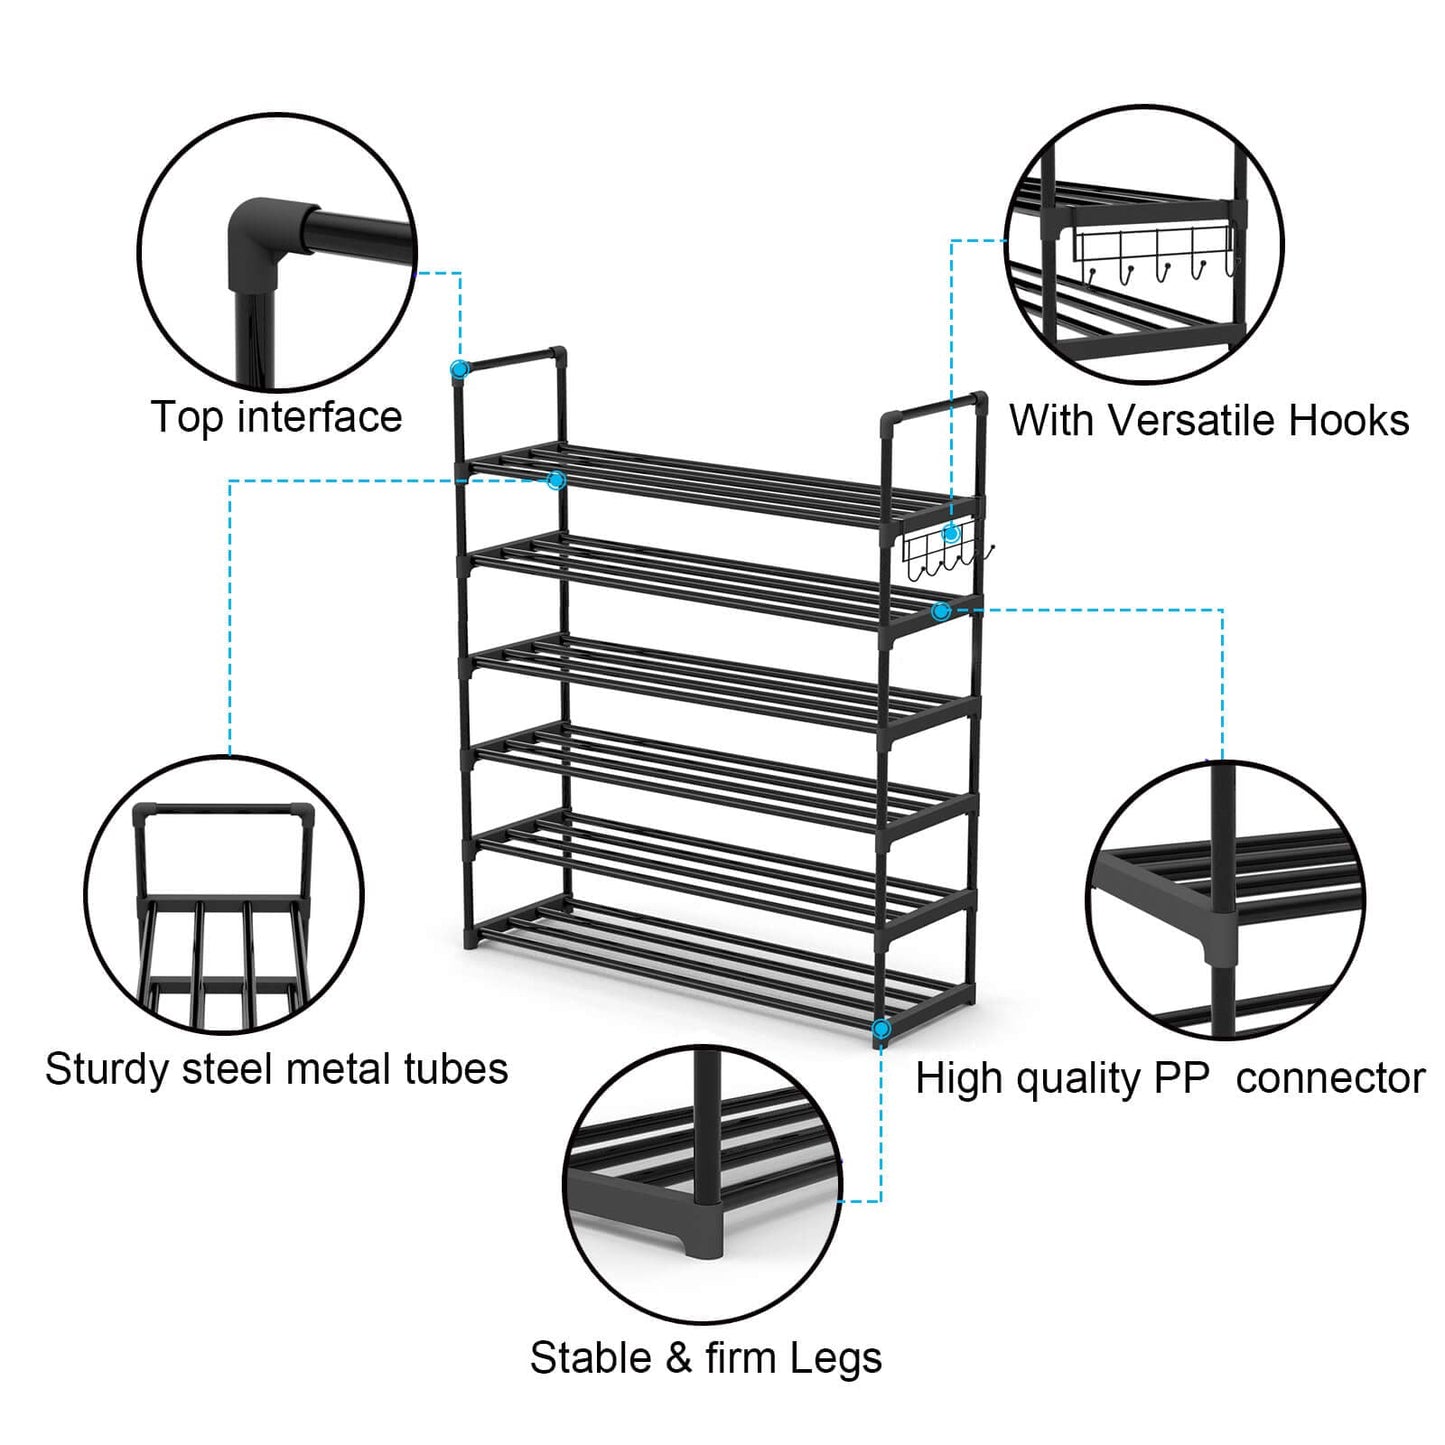 Hsscblet 6 Tiers Metal Shoe Rack,Adjustable Shoe Shelf Storage Organizer with Hooks,Stackable Boot & Shoe Storage,for Entryway,Hallway,Closet,Black